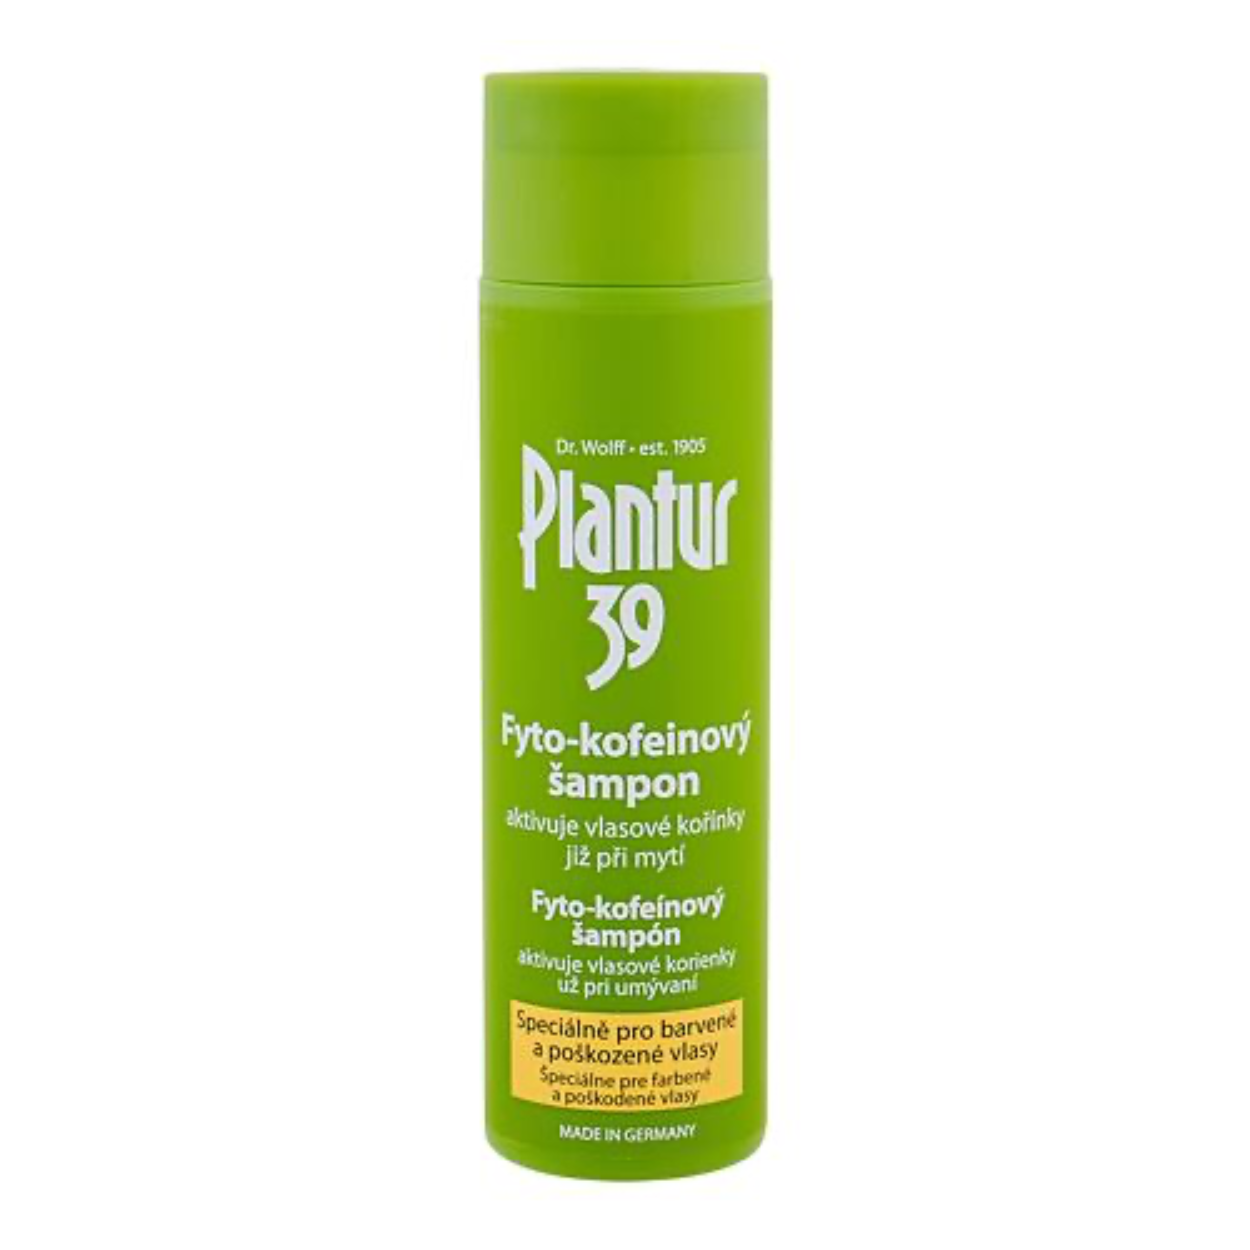 Plantur 39 šampon za kosu protiv opadanja